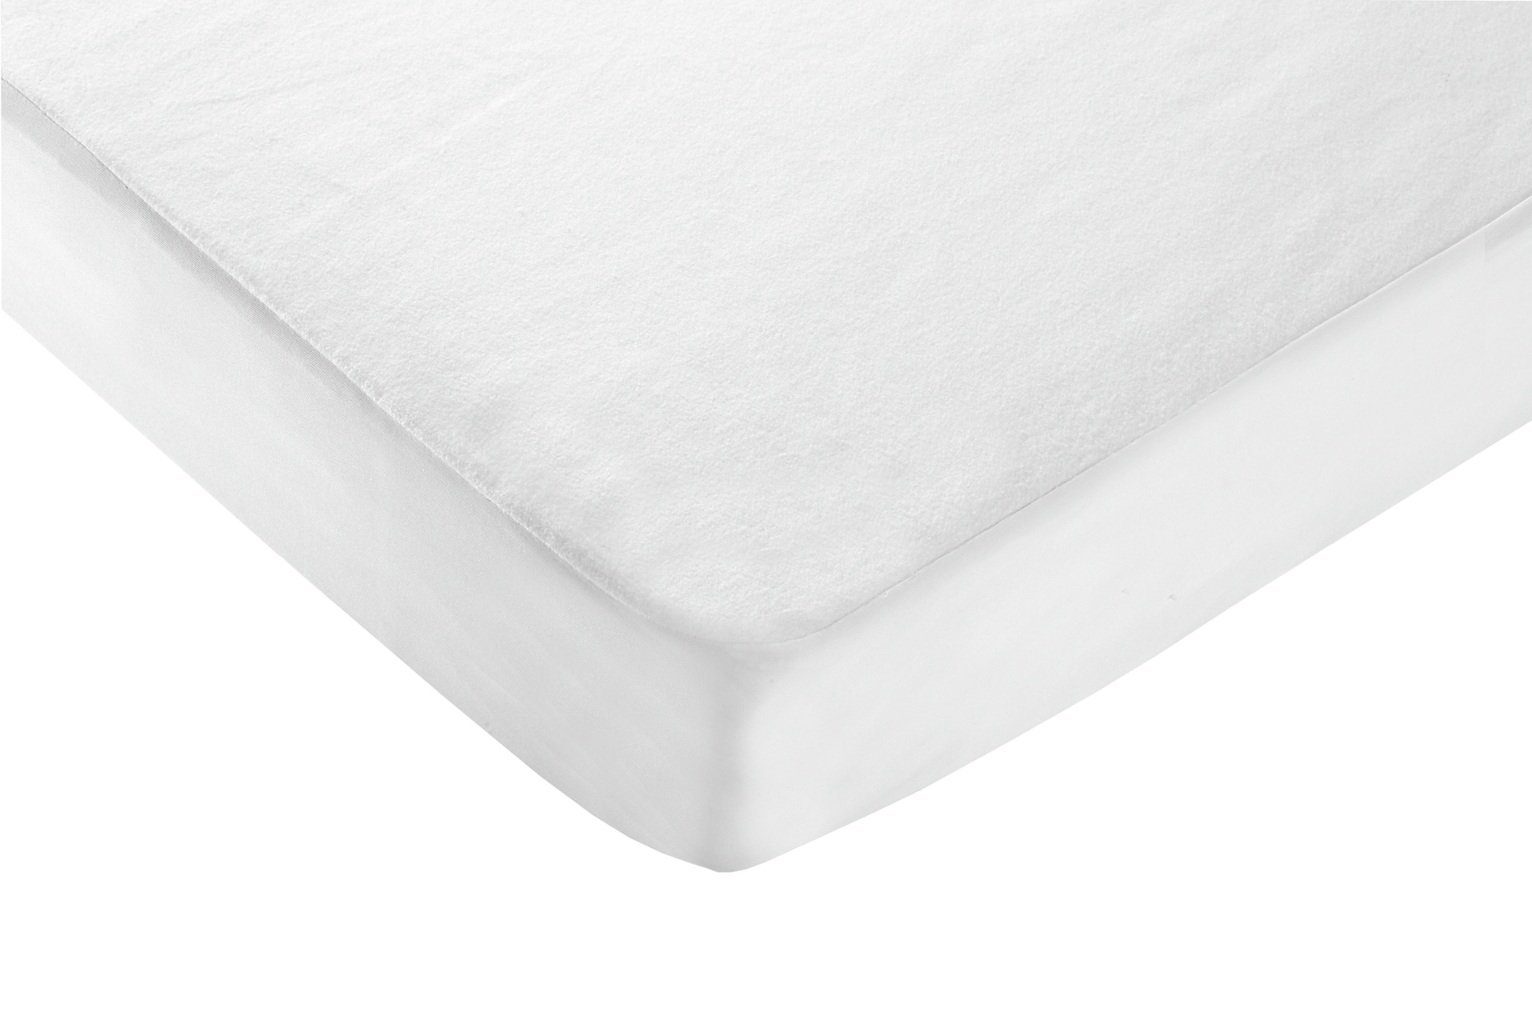 Baby Elegance Cot Bed Waterproof Mattress Protector Review